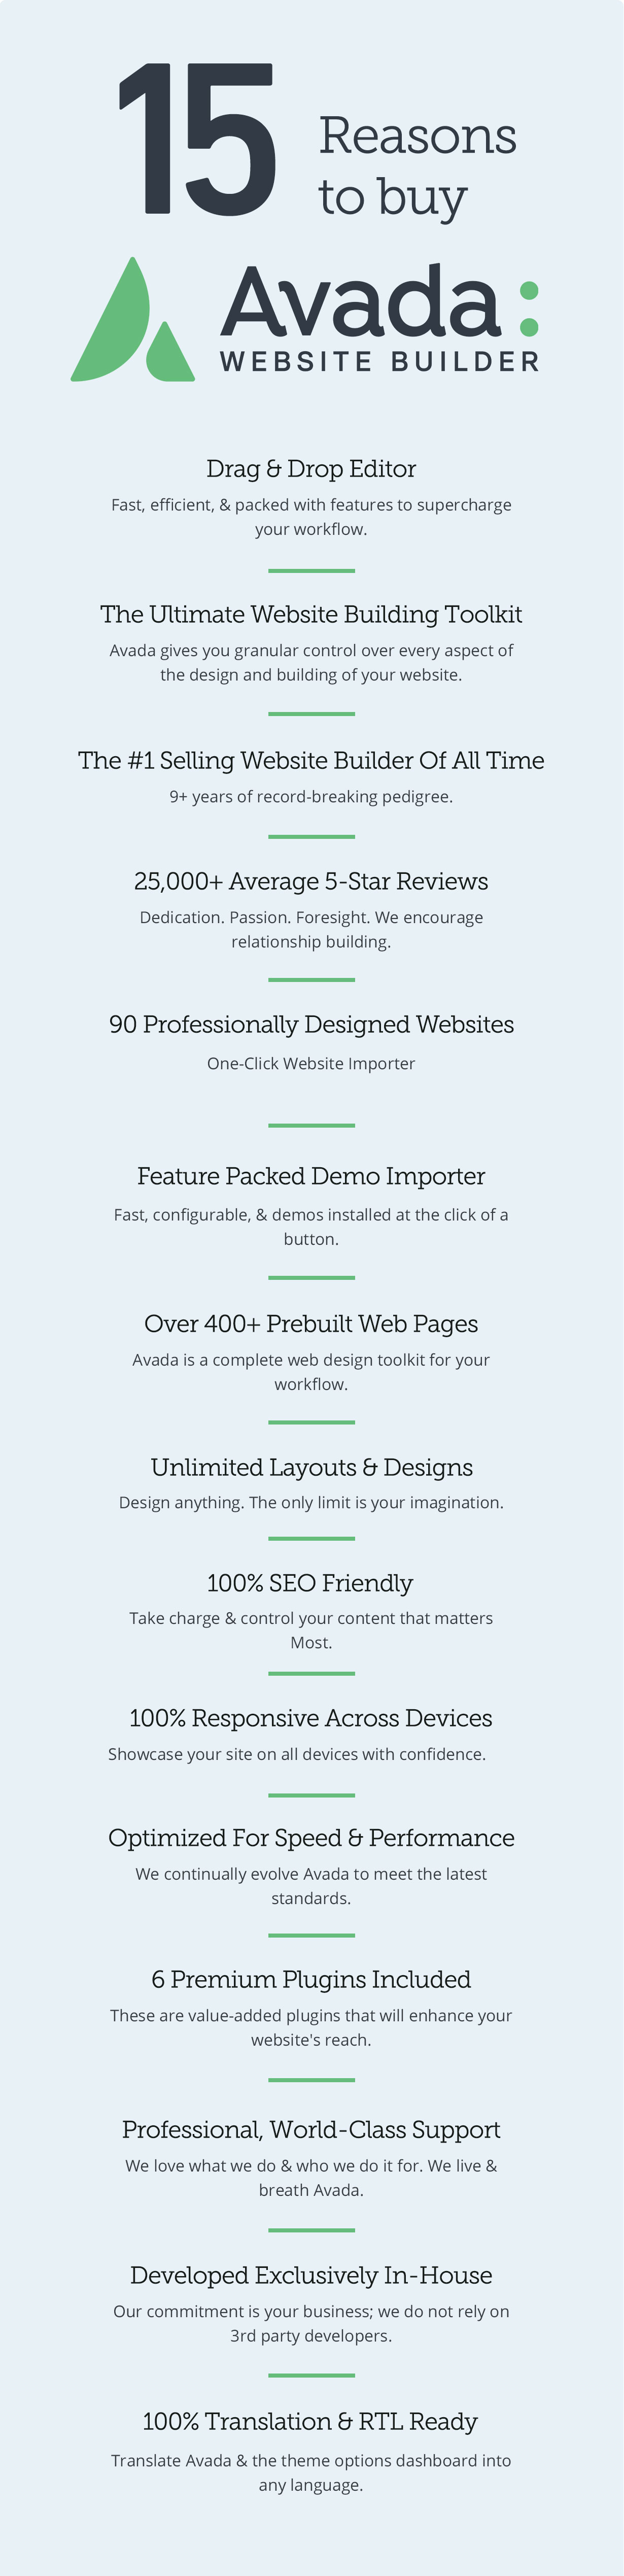 Avada | Website Builder For WordPress & WooCommerce - 33